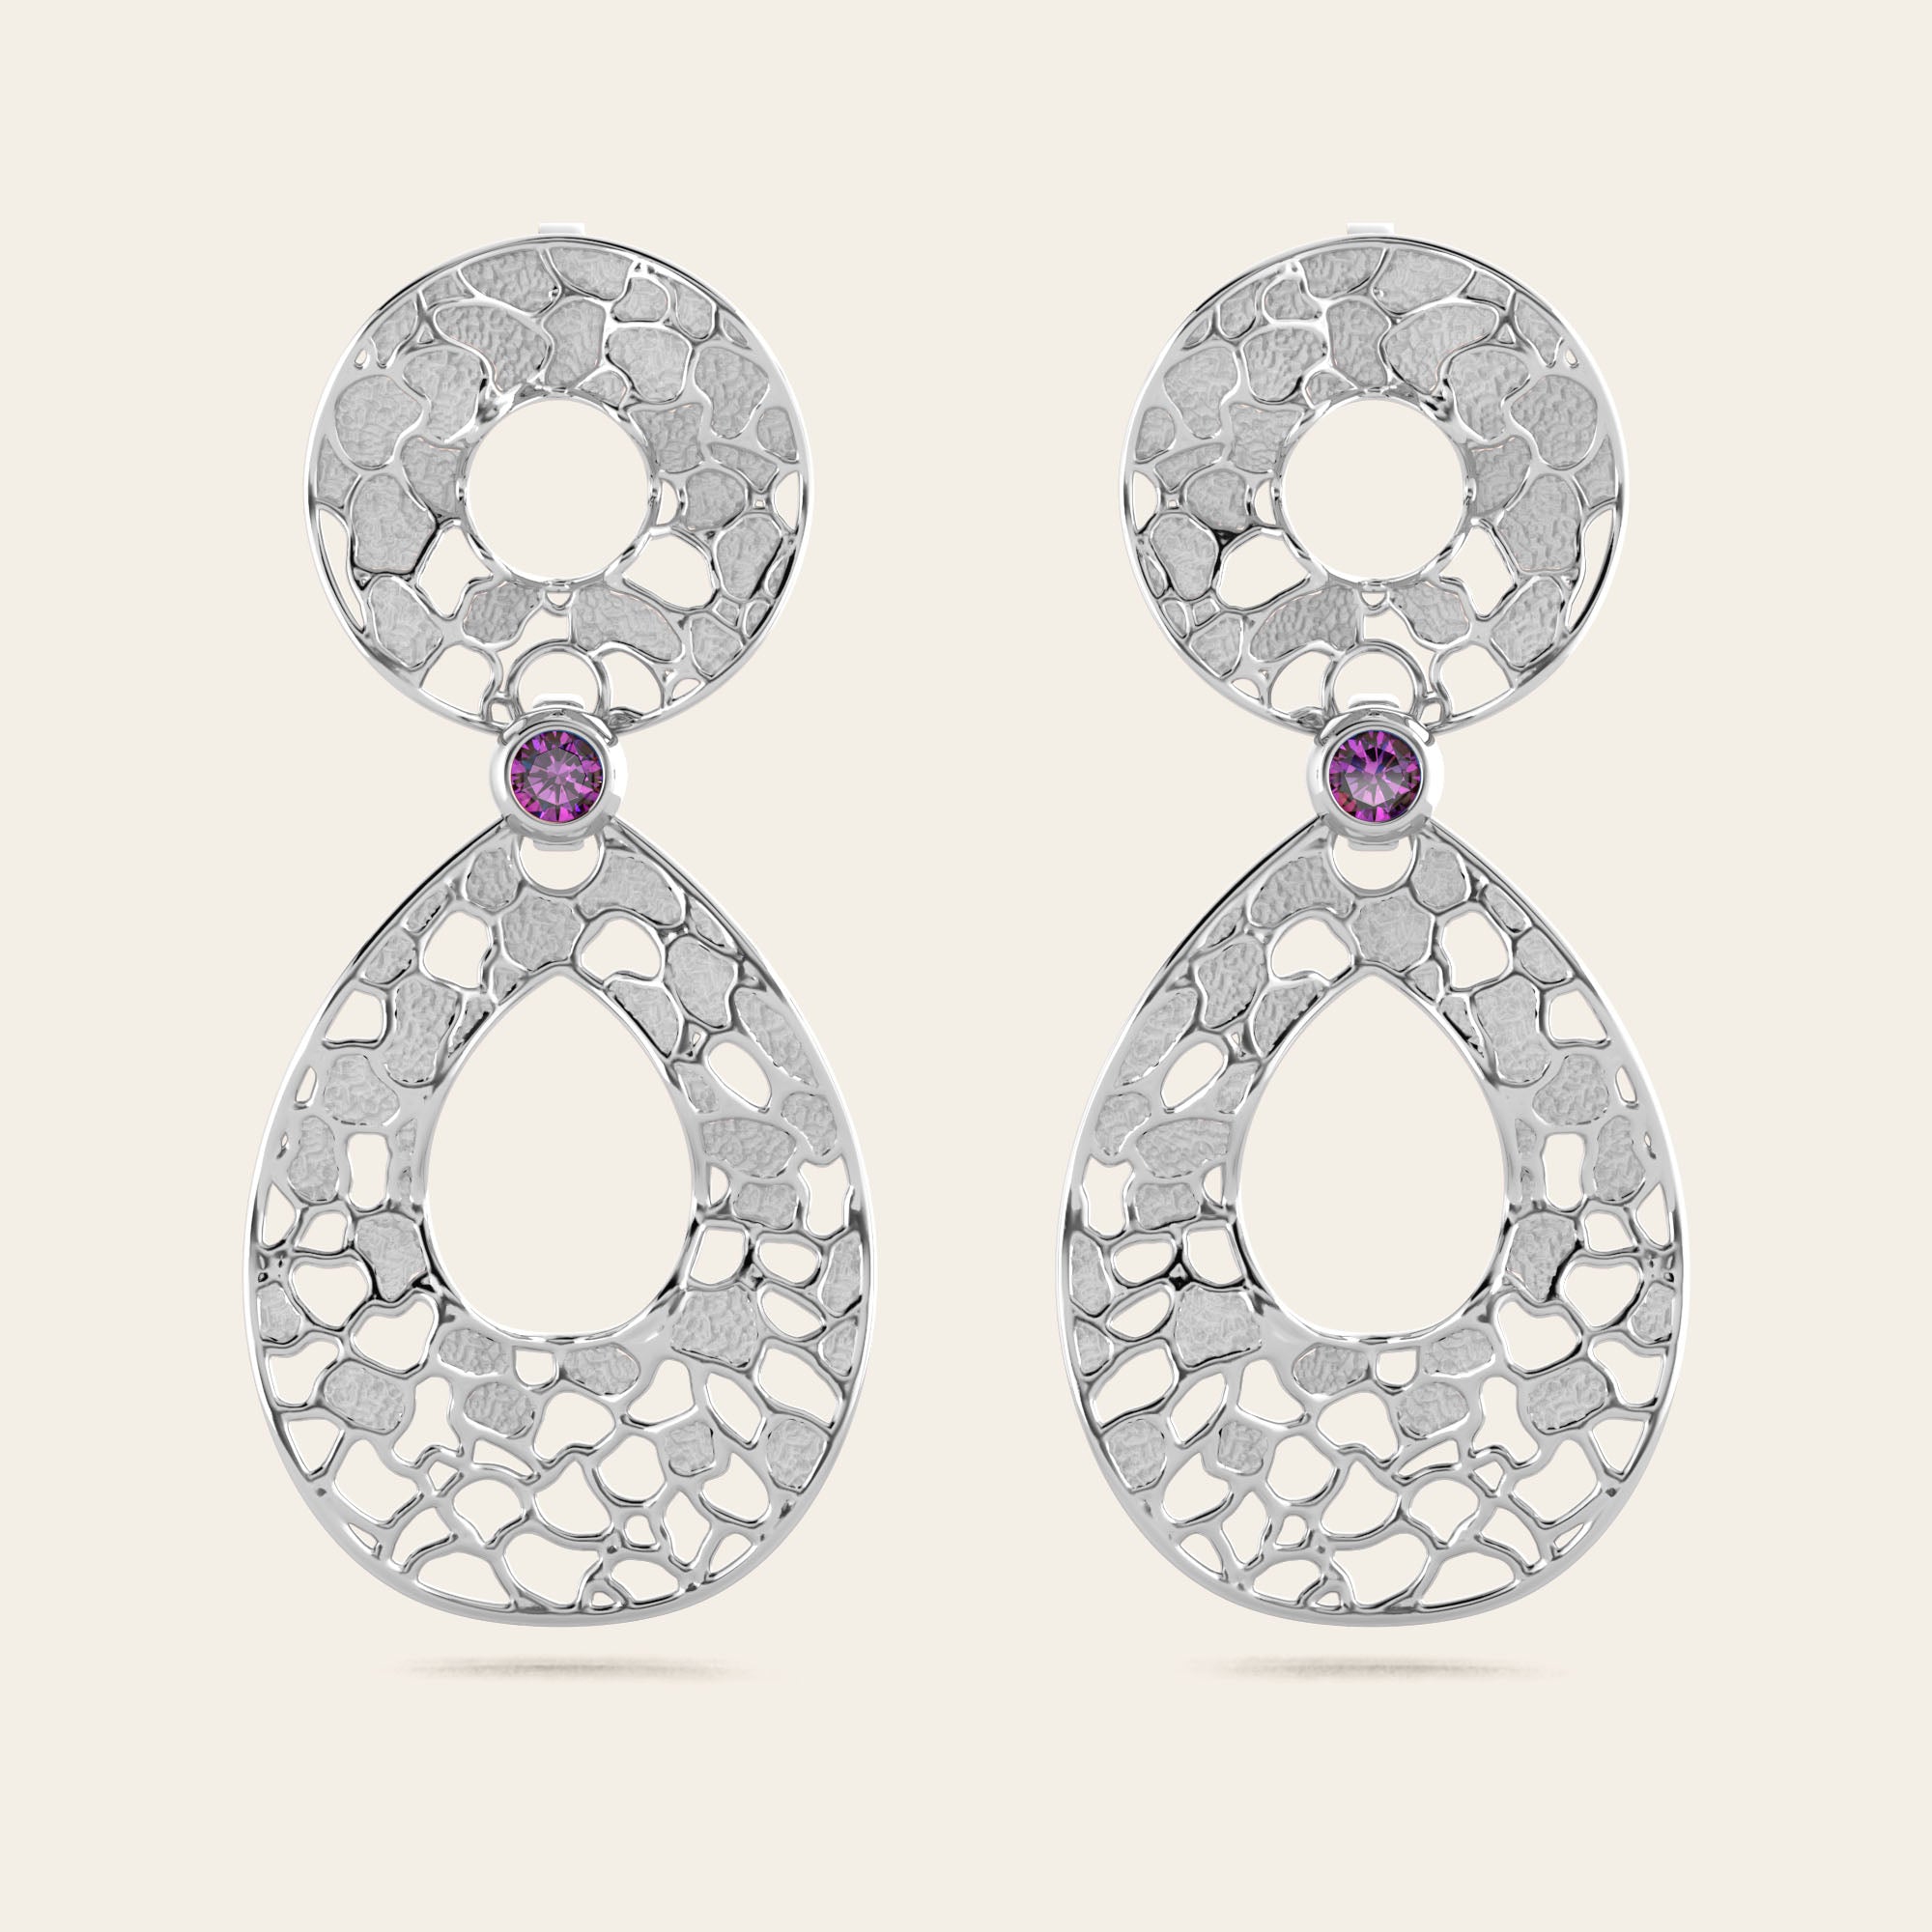 Cracked Earth Dangle Earrings with Purple Garnets in 18k White Gold